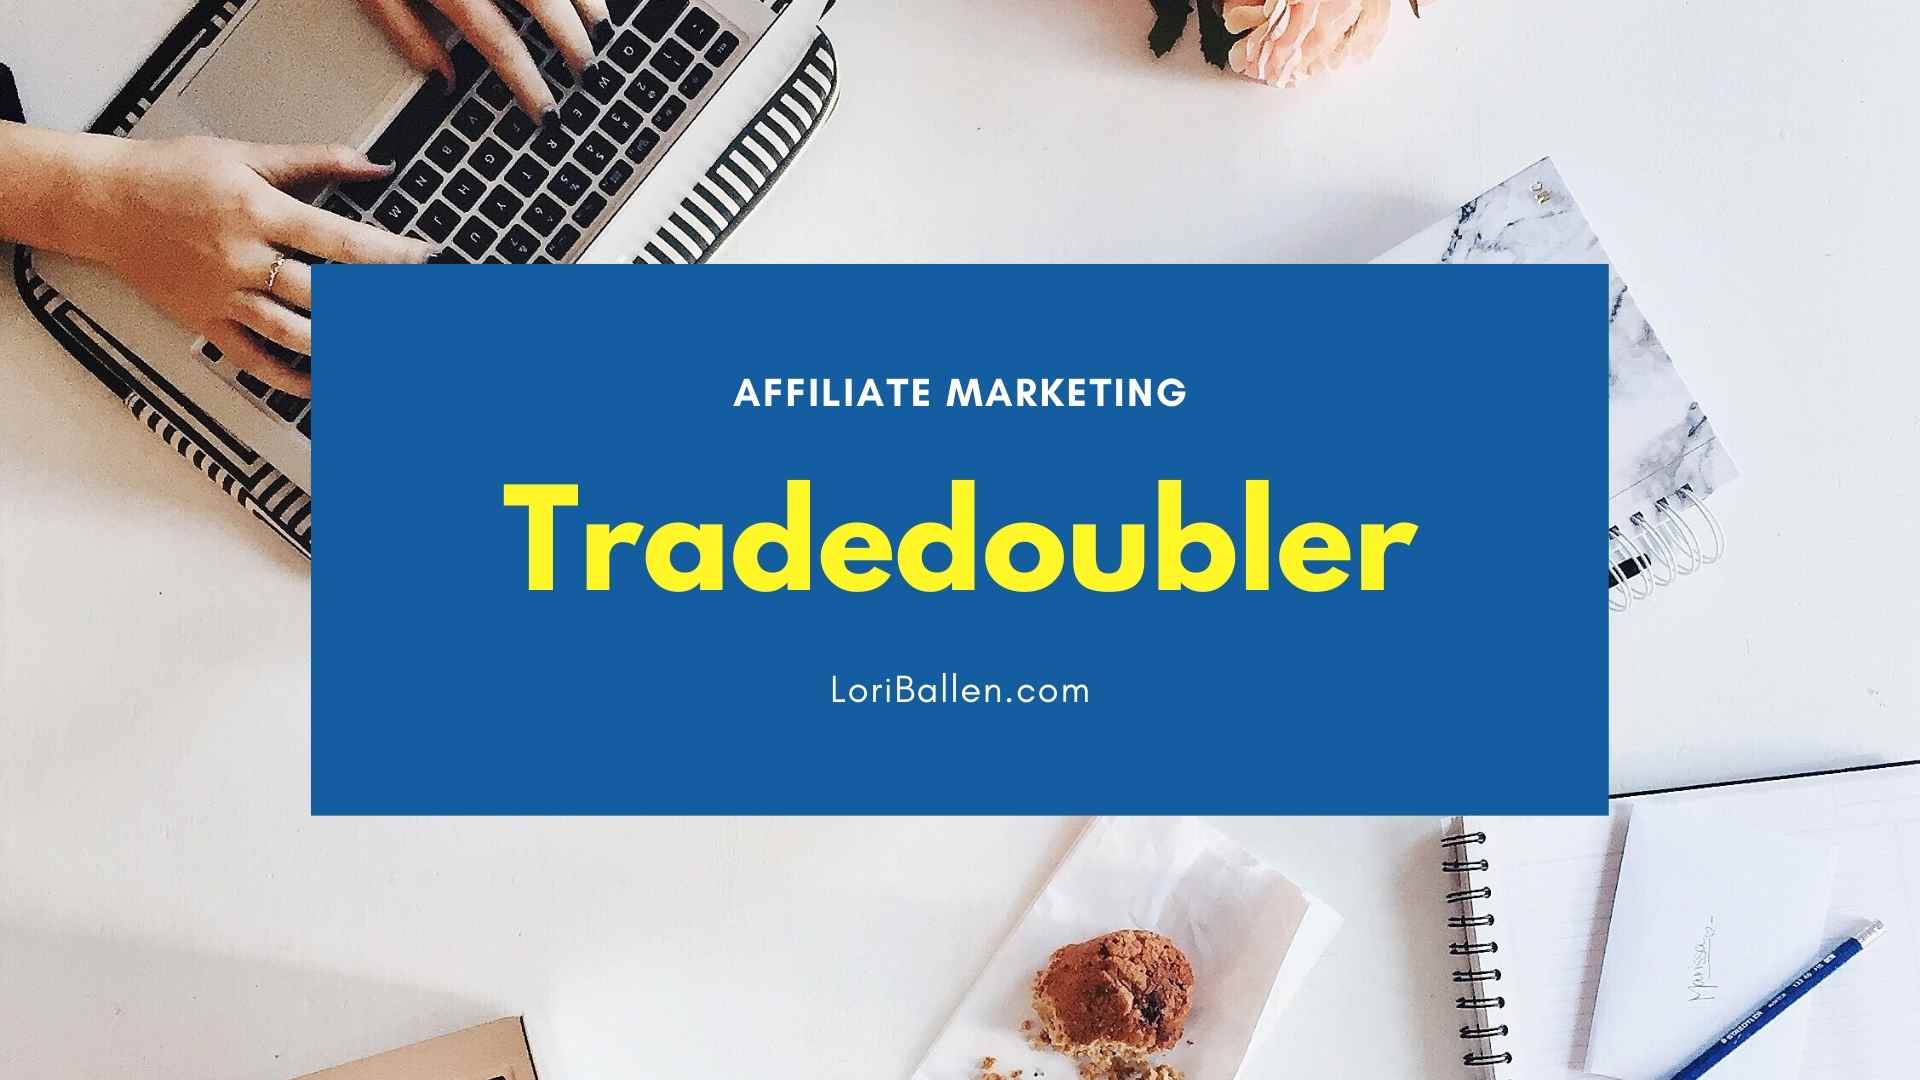 Tradedoubler is a performance-based marketing platform